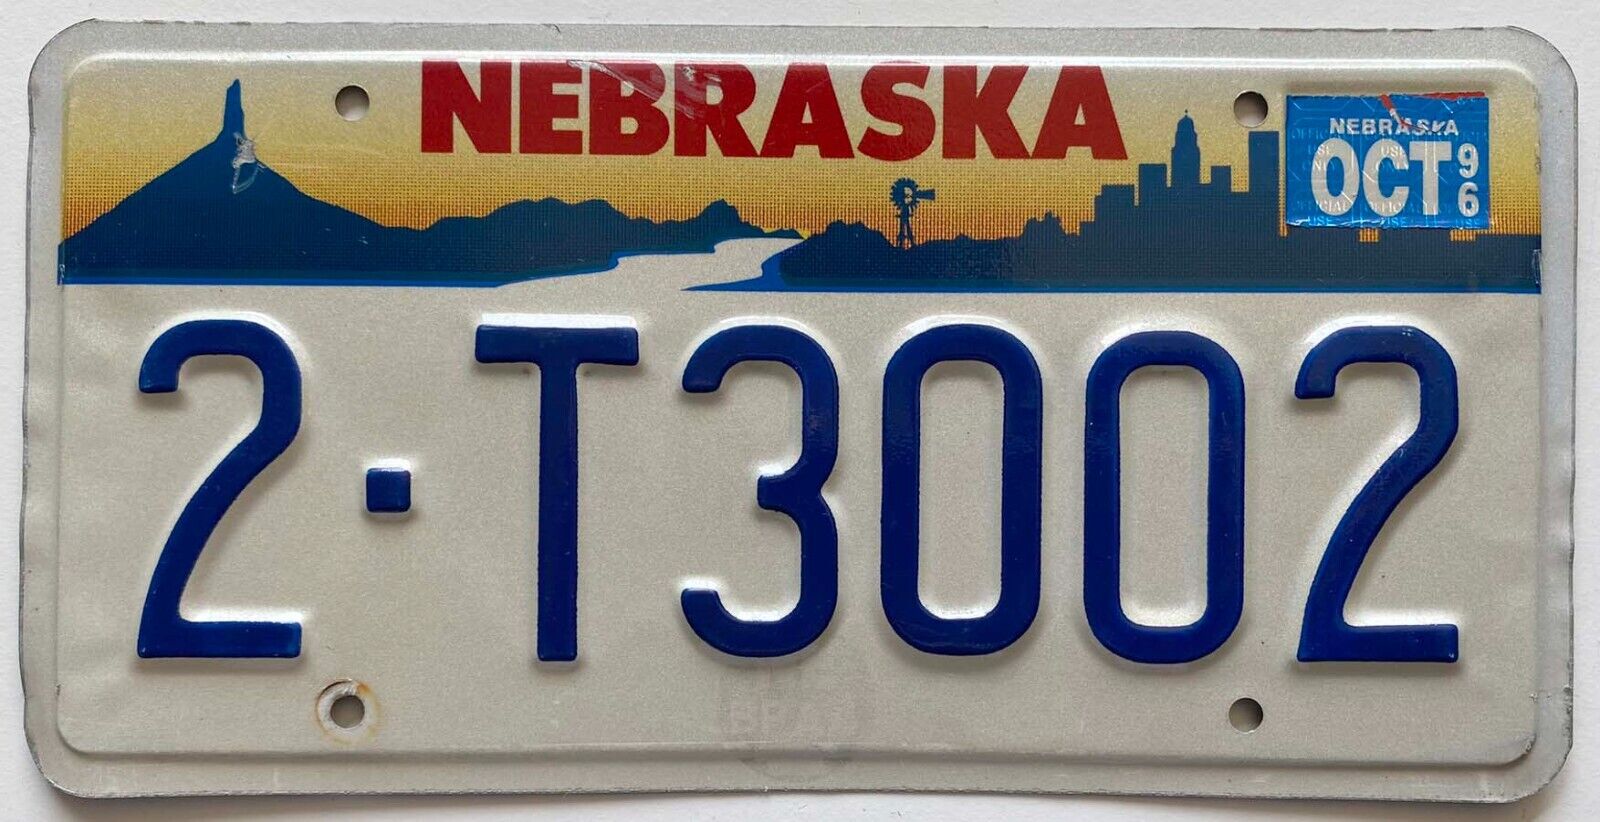 Nebraska 1996 Chimney Rock Omaha Skyline License Plate 2-T3002 Lancaster County